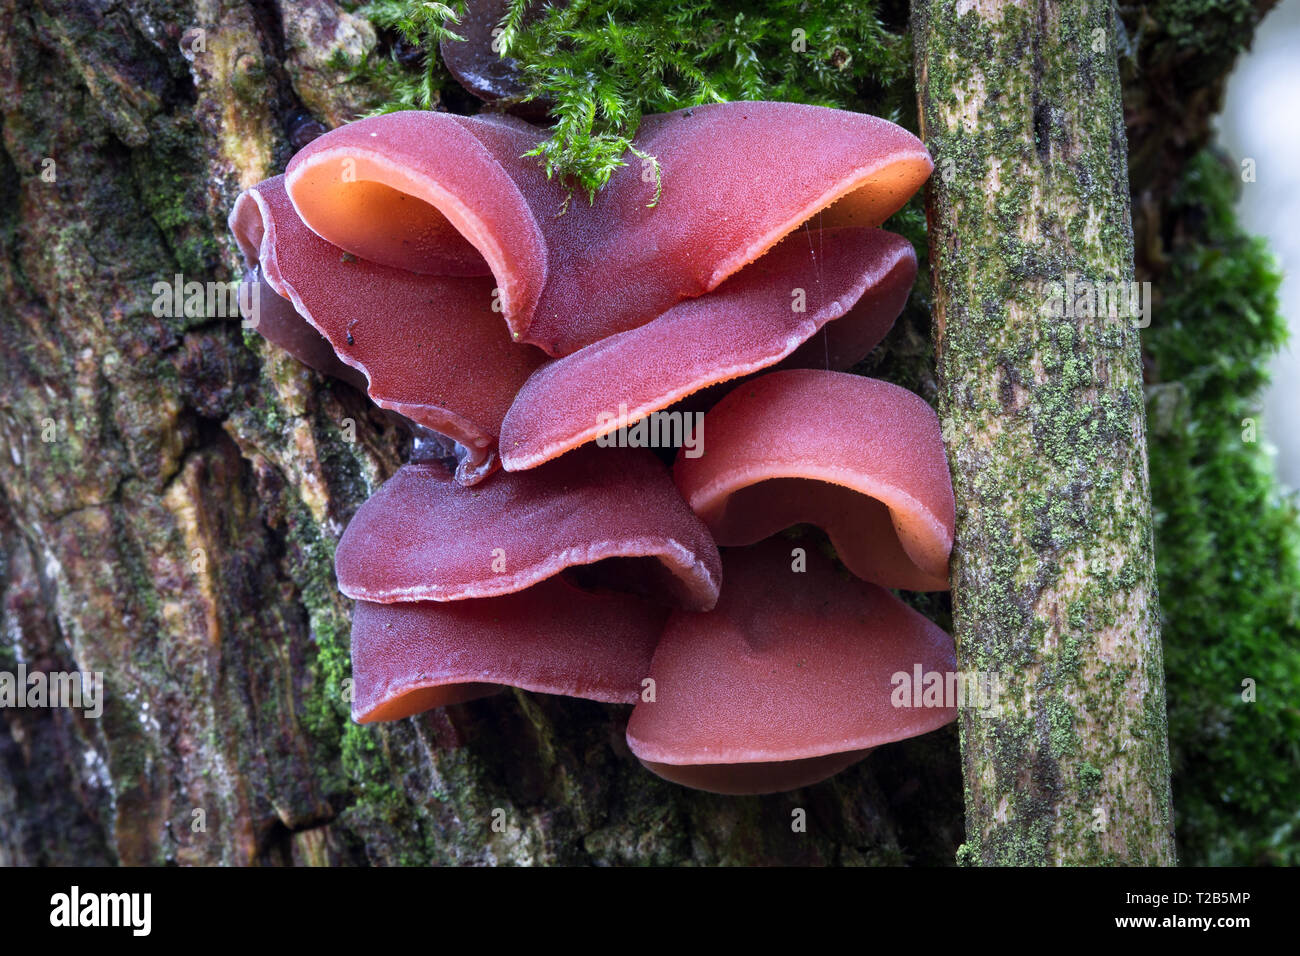 A group of jelly ear fungus (Auricularia auricula-judae) grows on a tree in The Ercall near Telford, Shropshire, England. Stock Photo